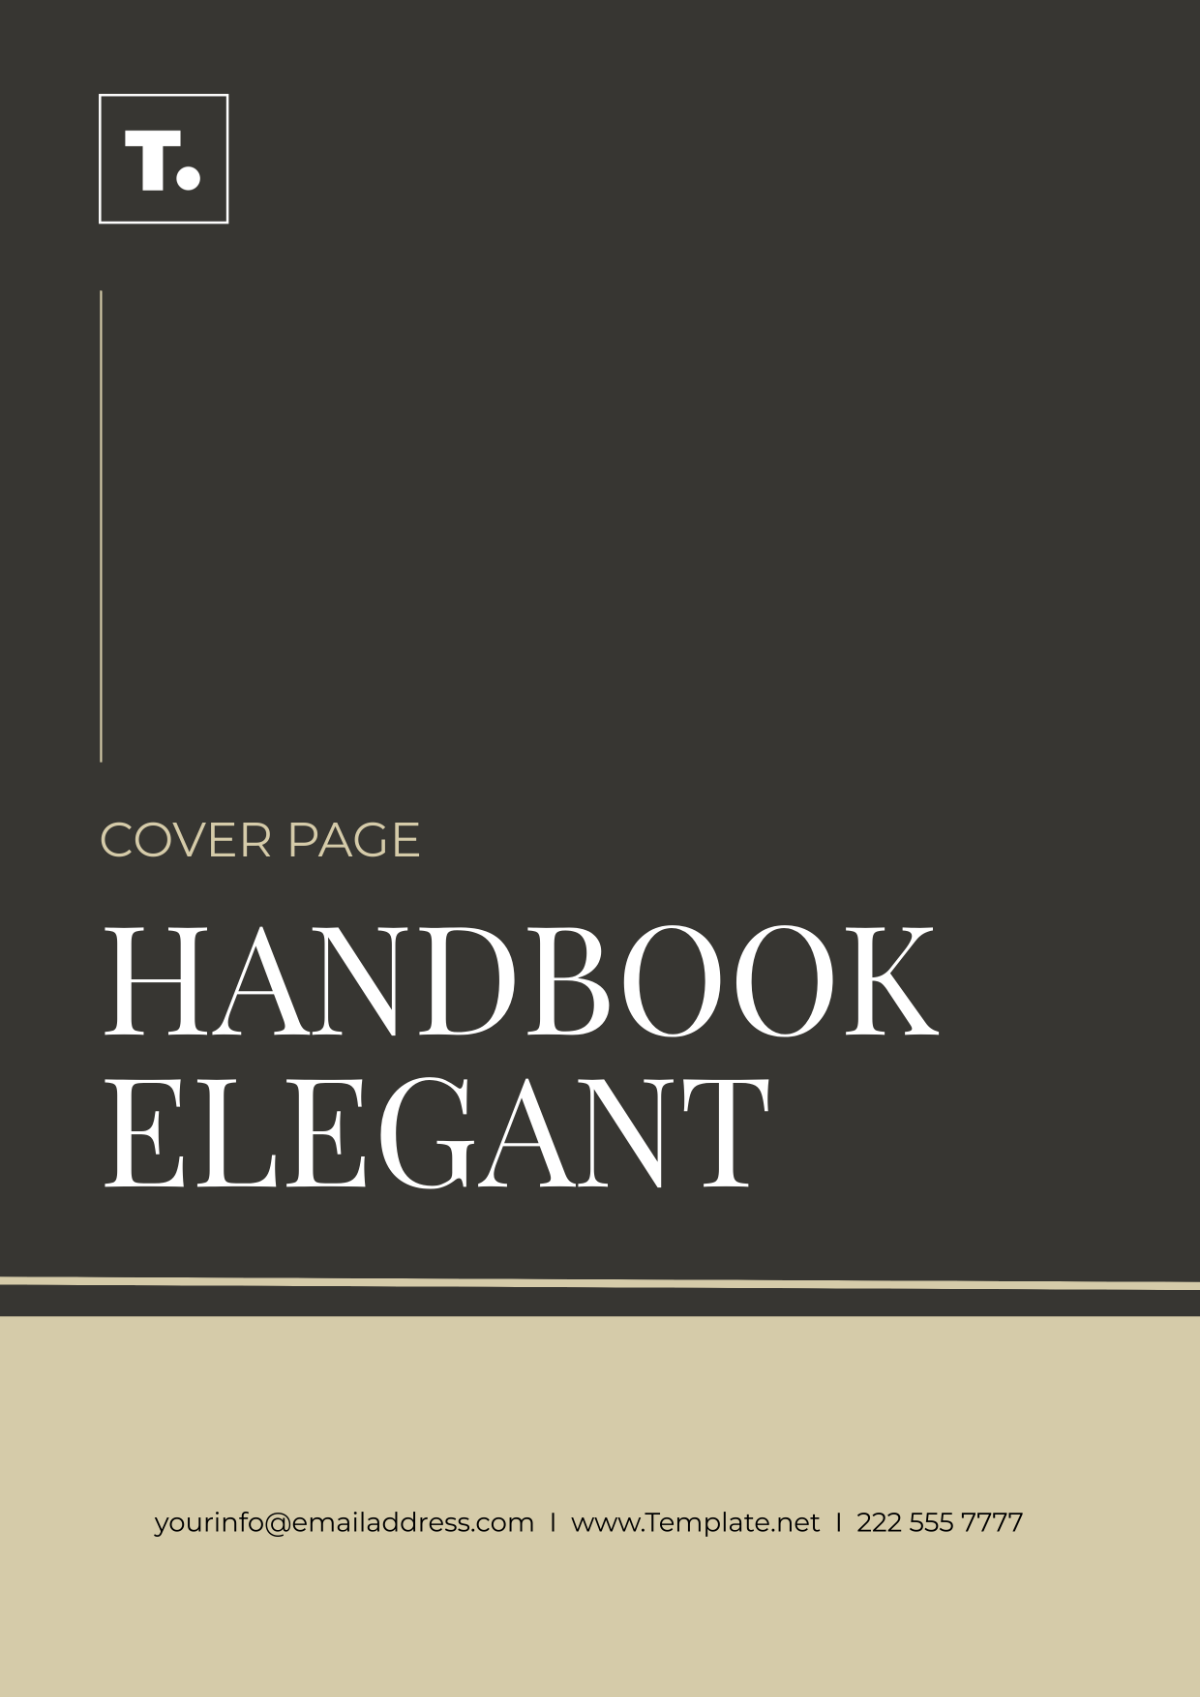 Handbook Elegant Cover Page Template